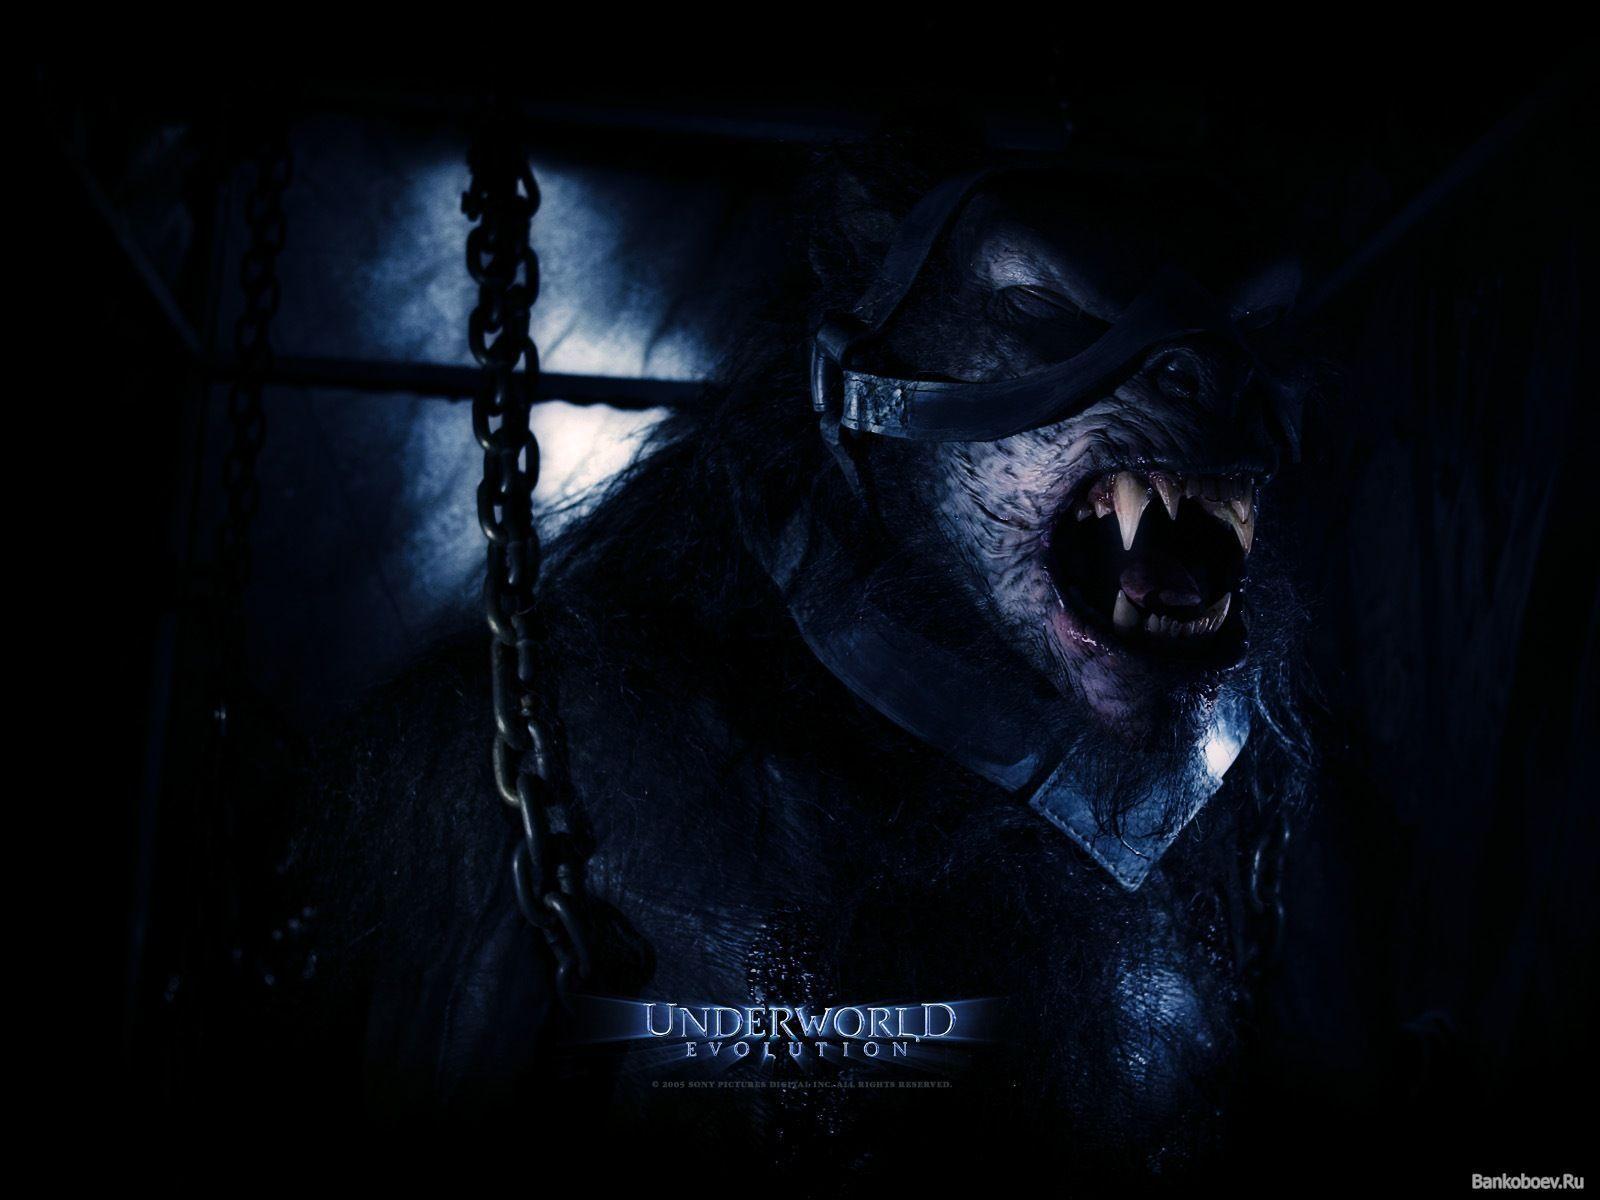 Underworld Werewolf Wallpapers Image & Pictures.